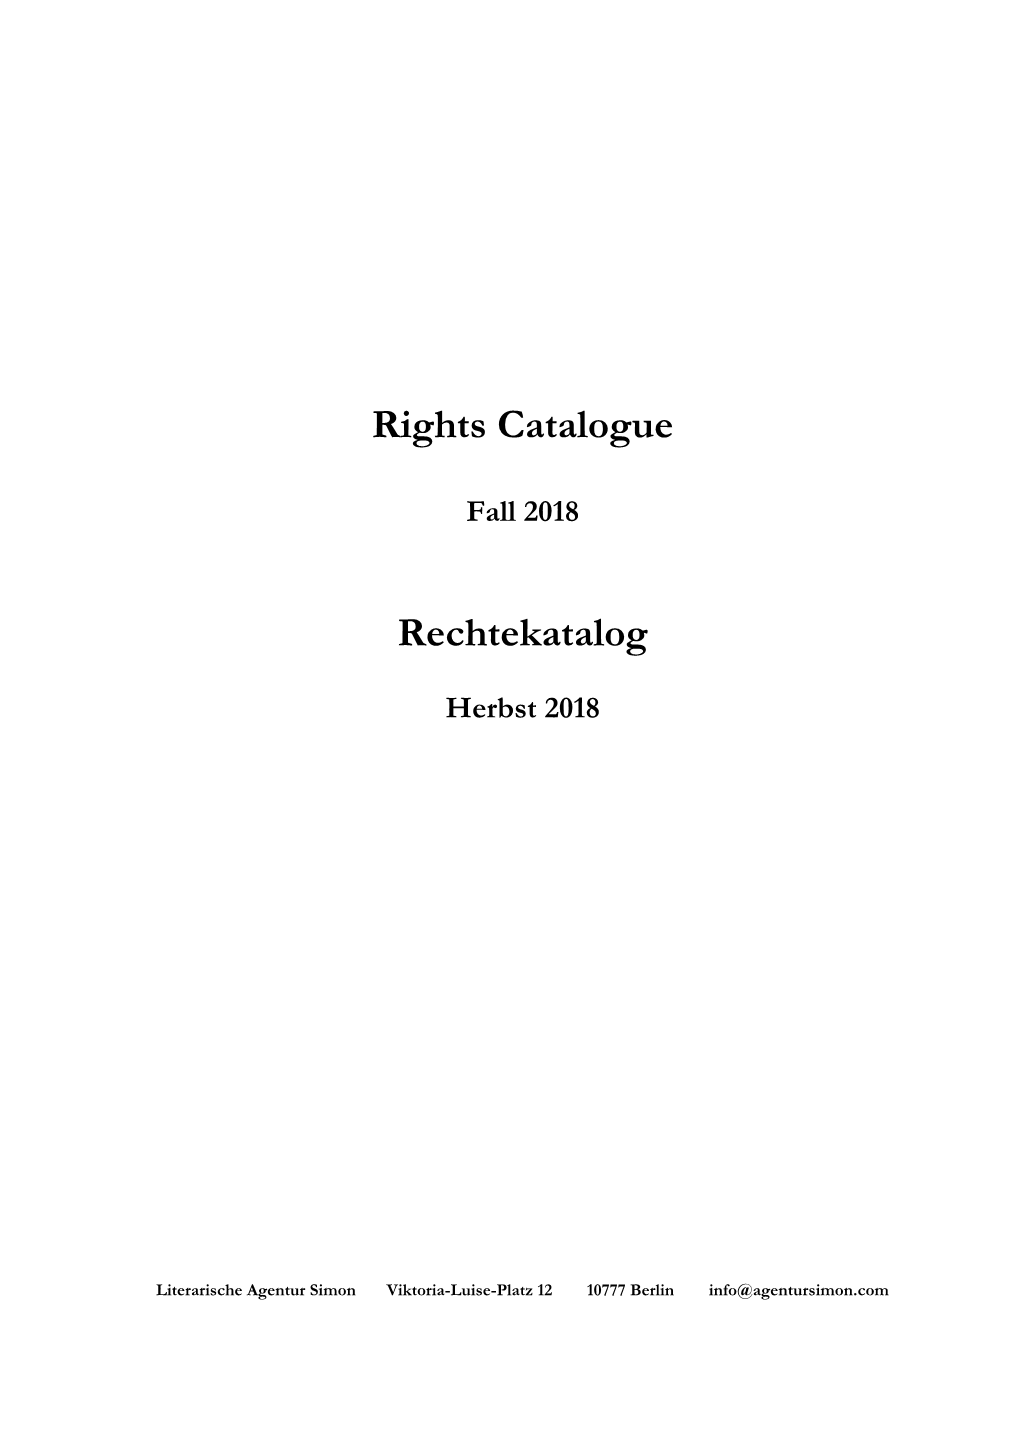 Rights Catalogue Rechtekatalog